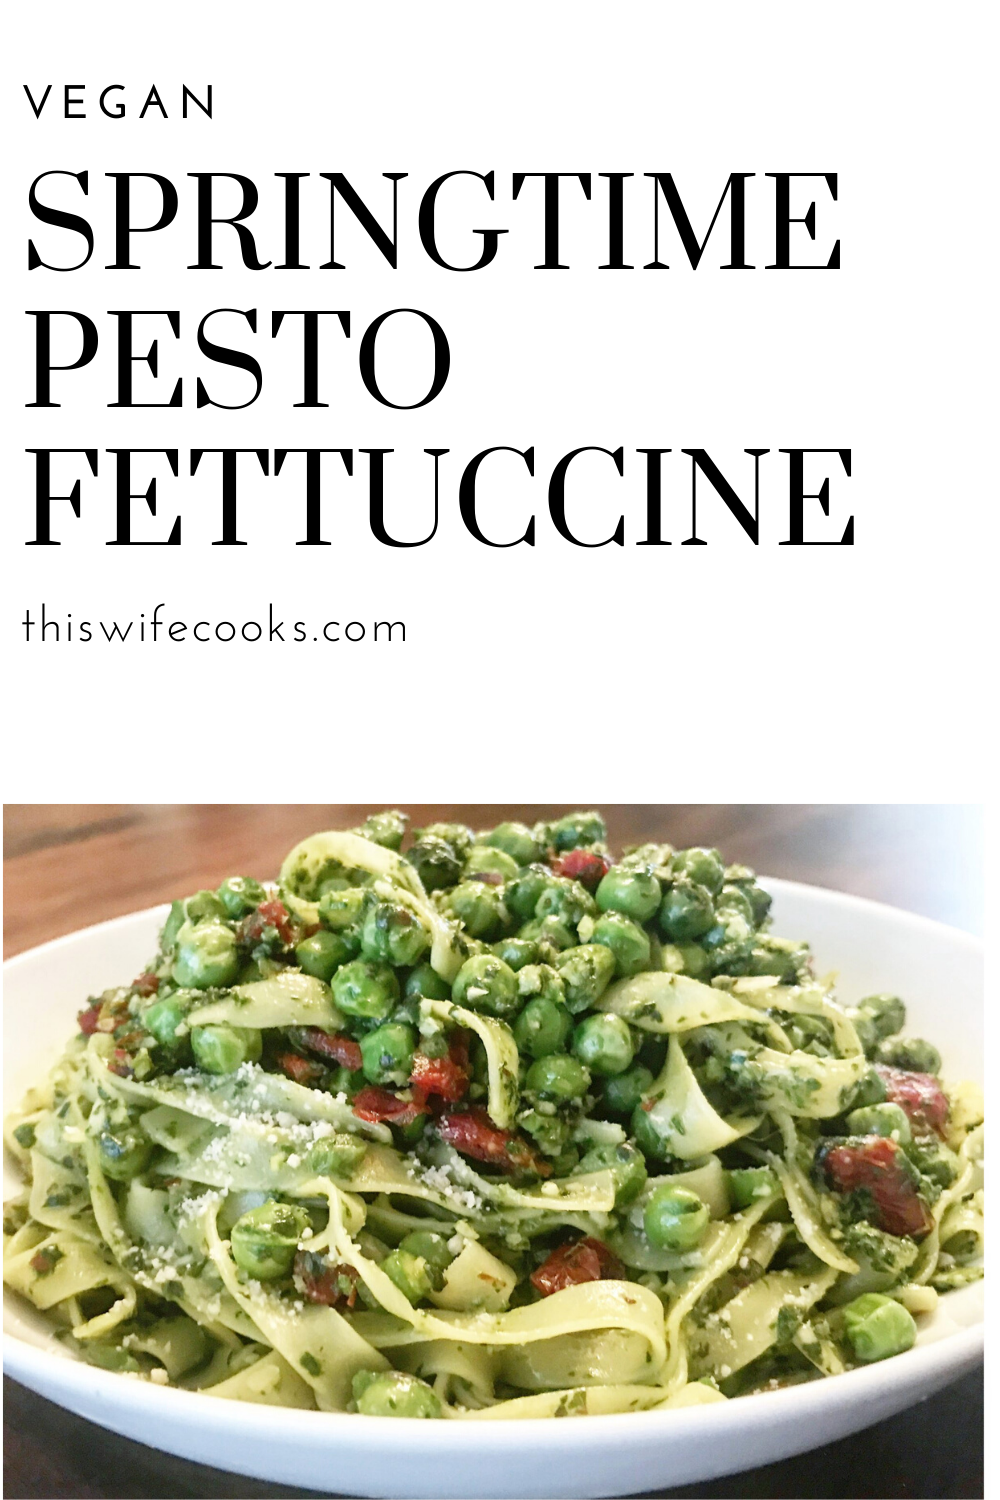 Springtime Pesto Fettuccine - Asparagus, peas, sun-dried tomatoes, and pesto make for a delicious springtime (anytime!) pasta dinner. Dairy-free and Vegan. via @thiswifecooks